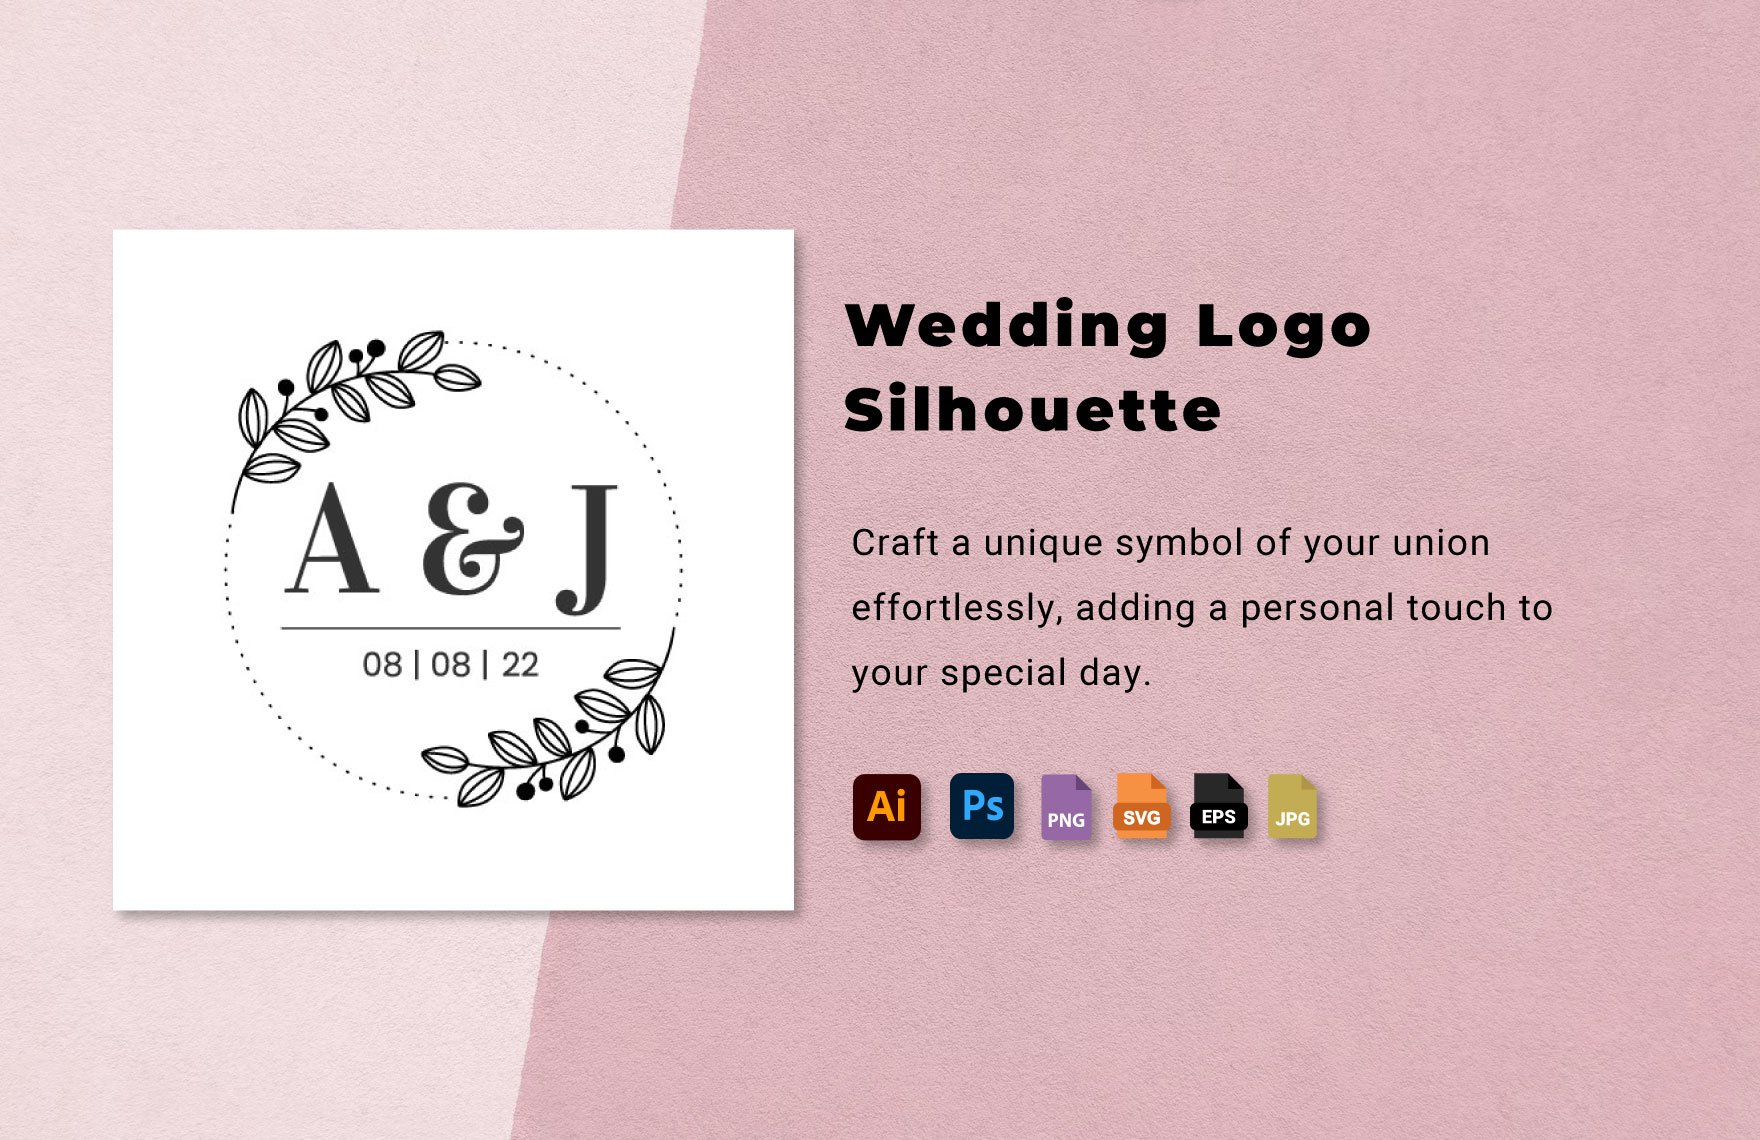 Free Wedding Logo Silhouette in Illustrator, PSD, EPS, SVG, JPG, PNG